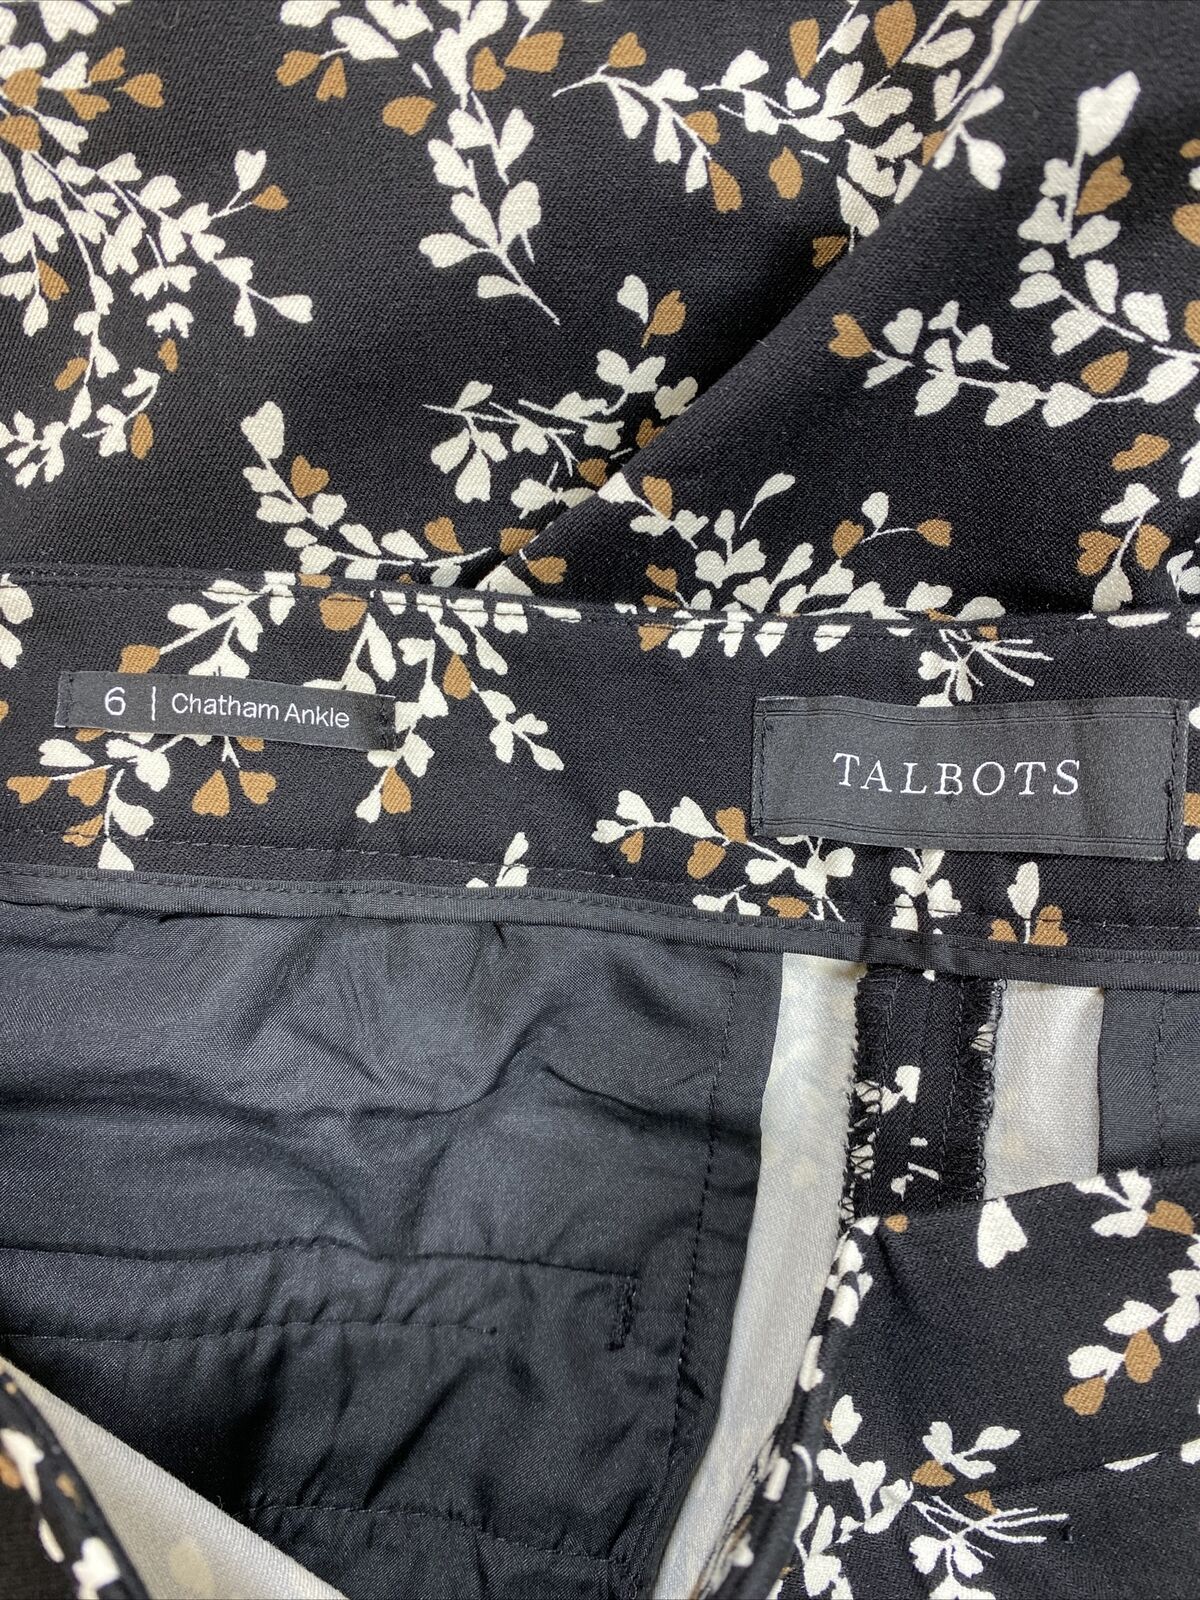 Talbots Women's Black Floral Side Zip Chatham Ankle Dress Pants - 6